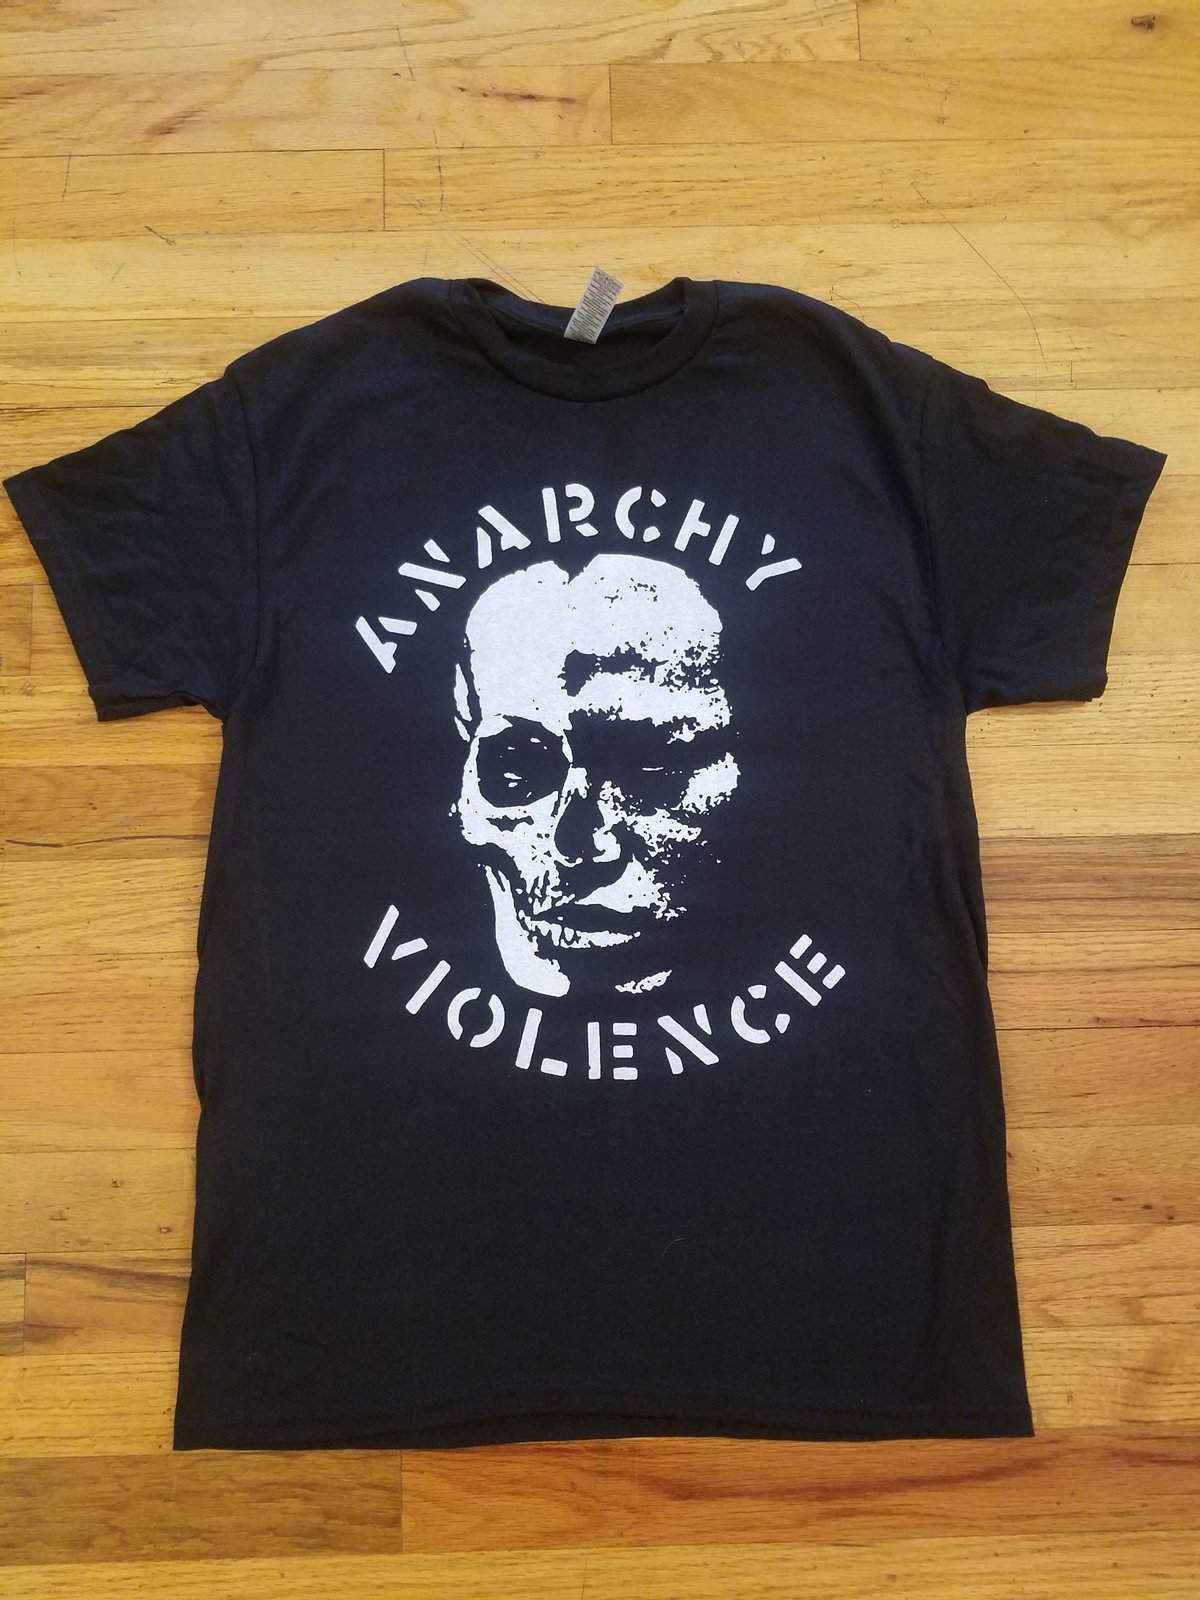 Anarchy//Violence Shirt